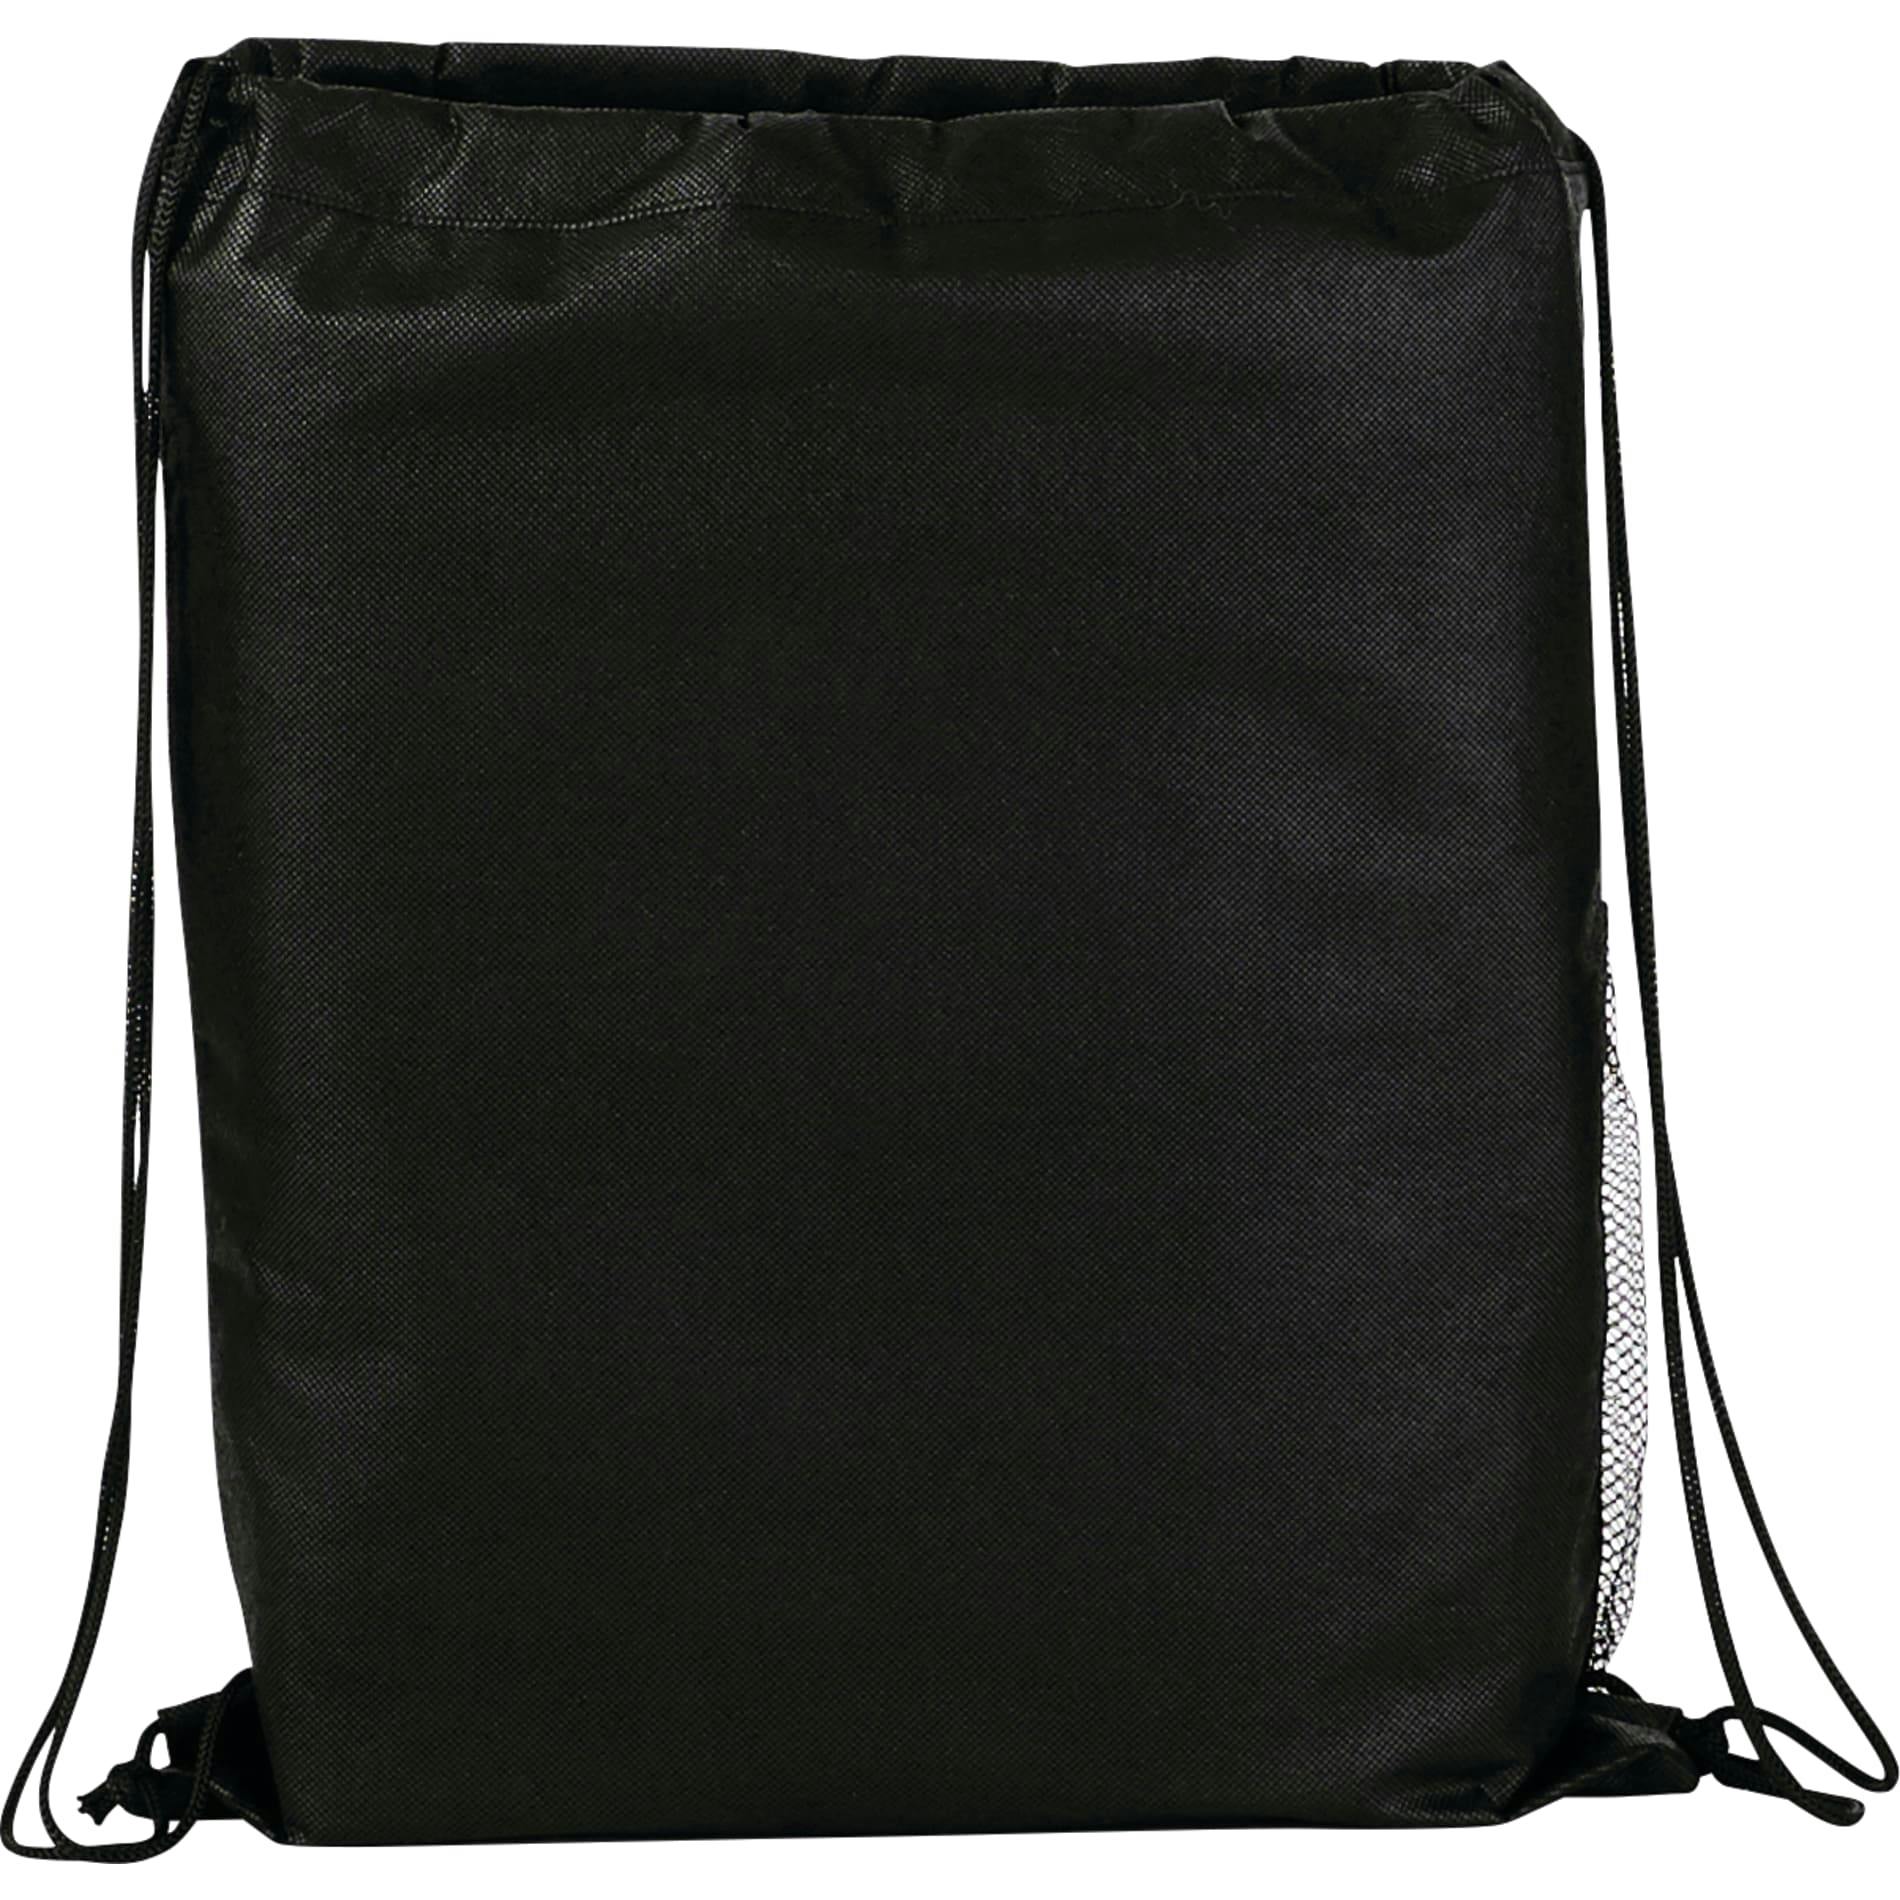 Flare Drawstring Bag - additional Image 1